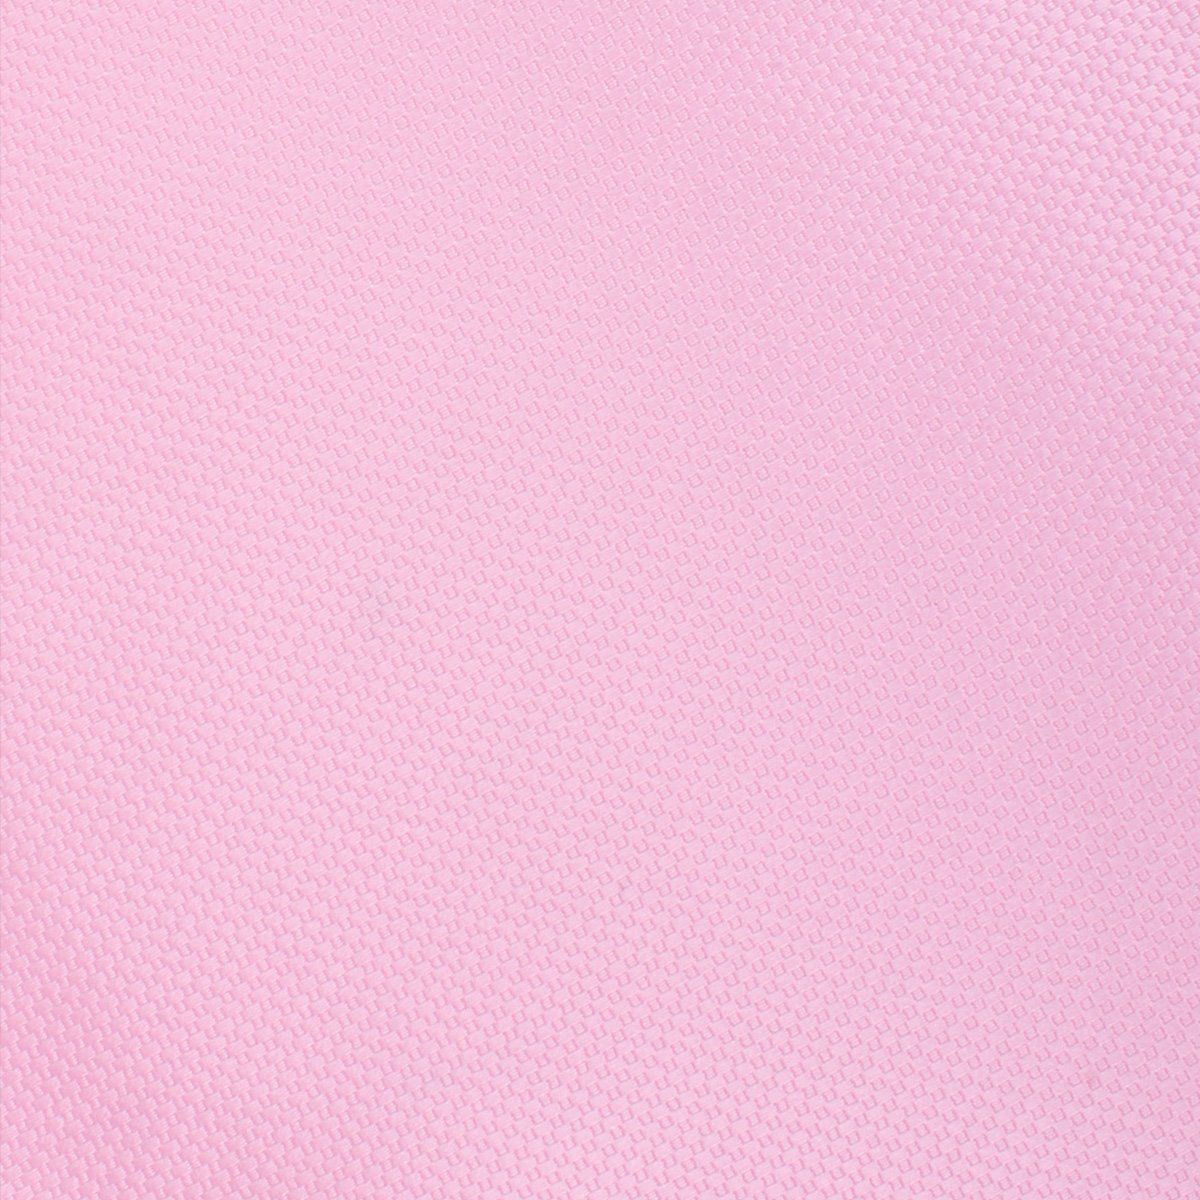 Peony Pink Basket Weave Pocket Square Fabric